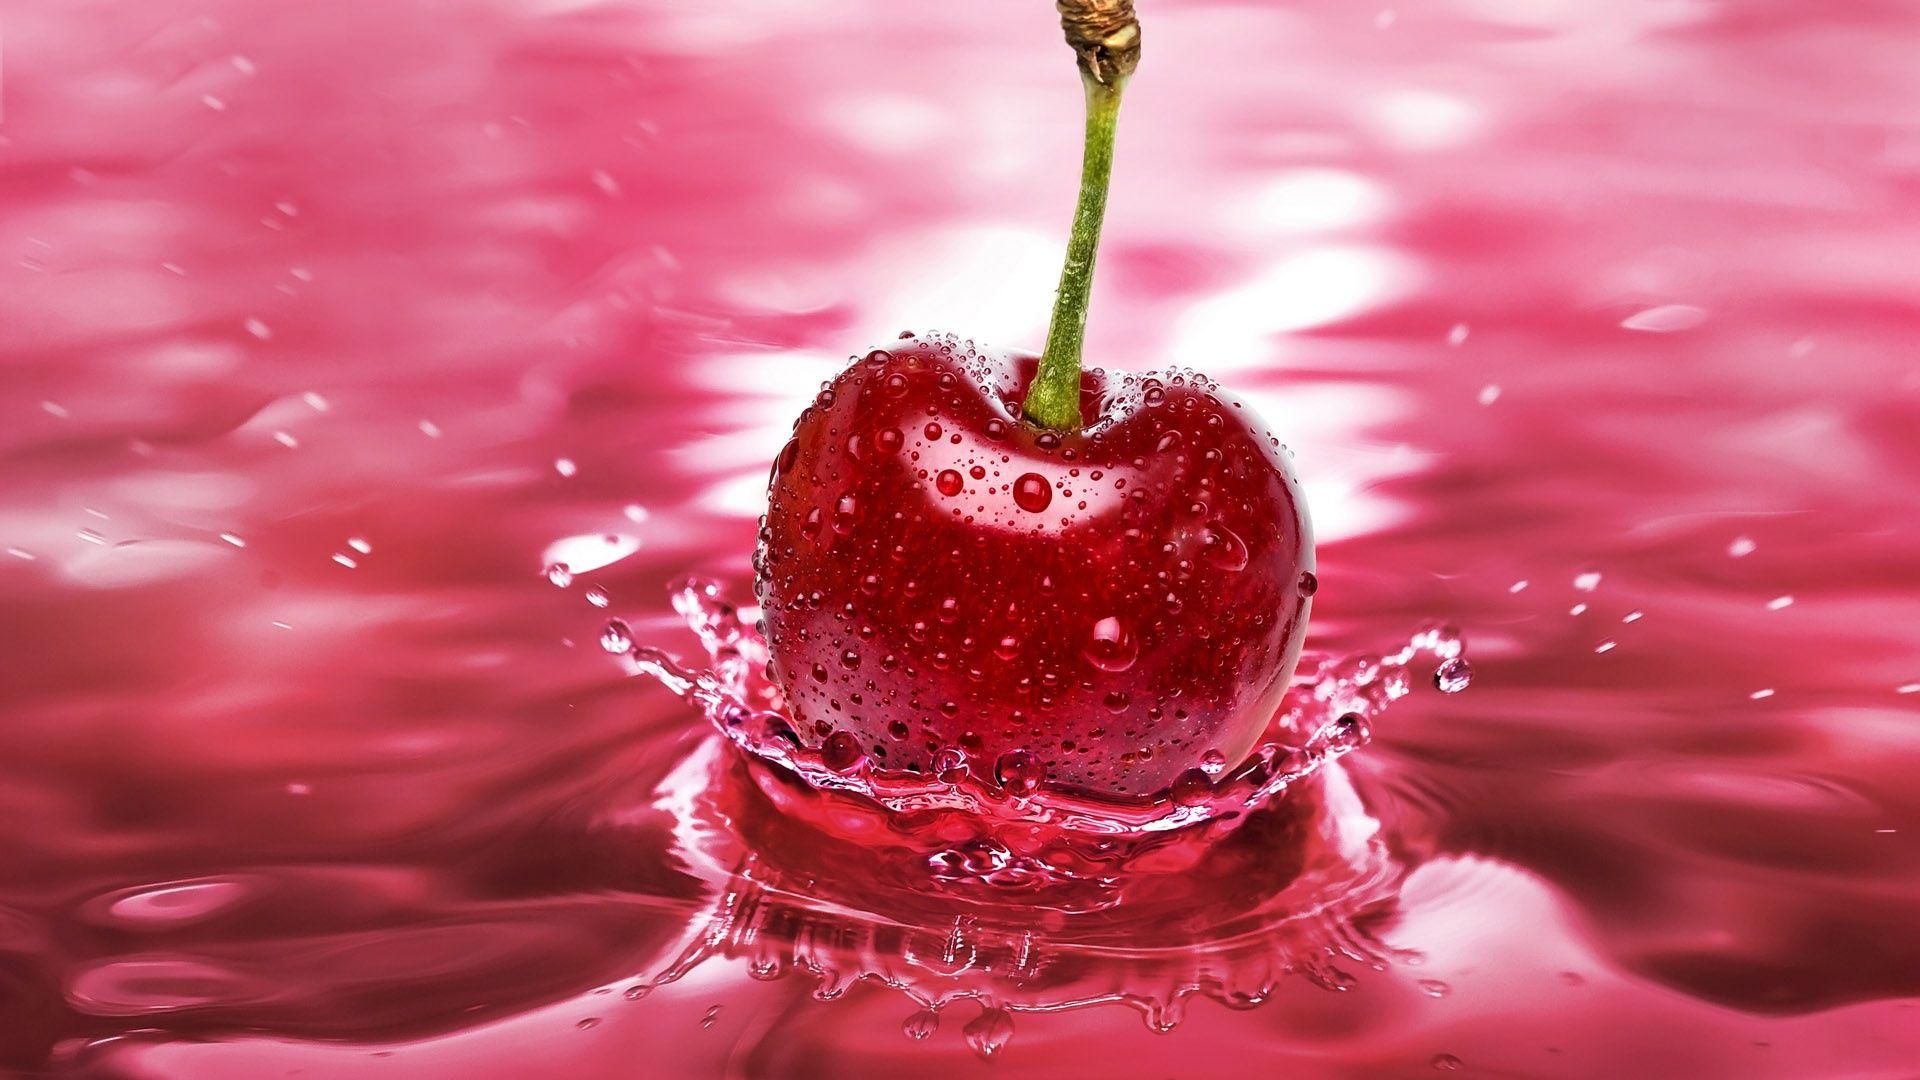 Cherry Fruit Splash on The Water Photo Gallery Wallpaper